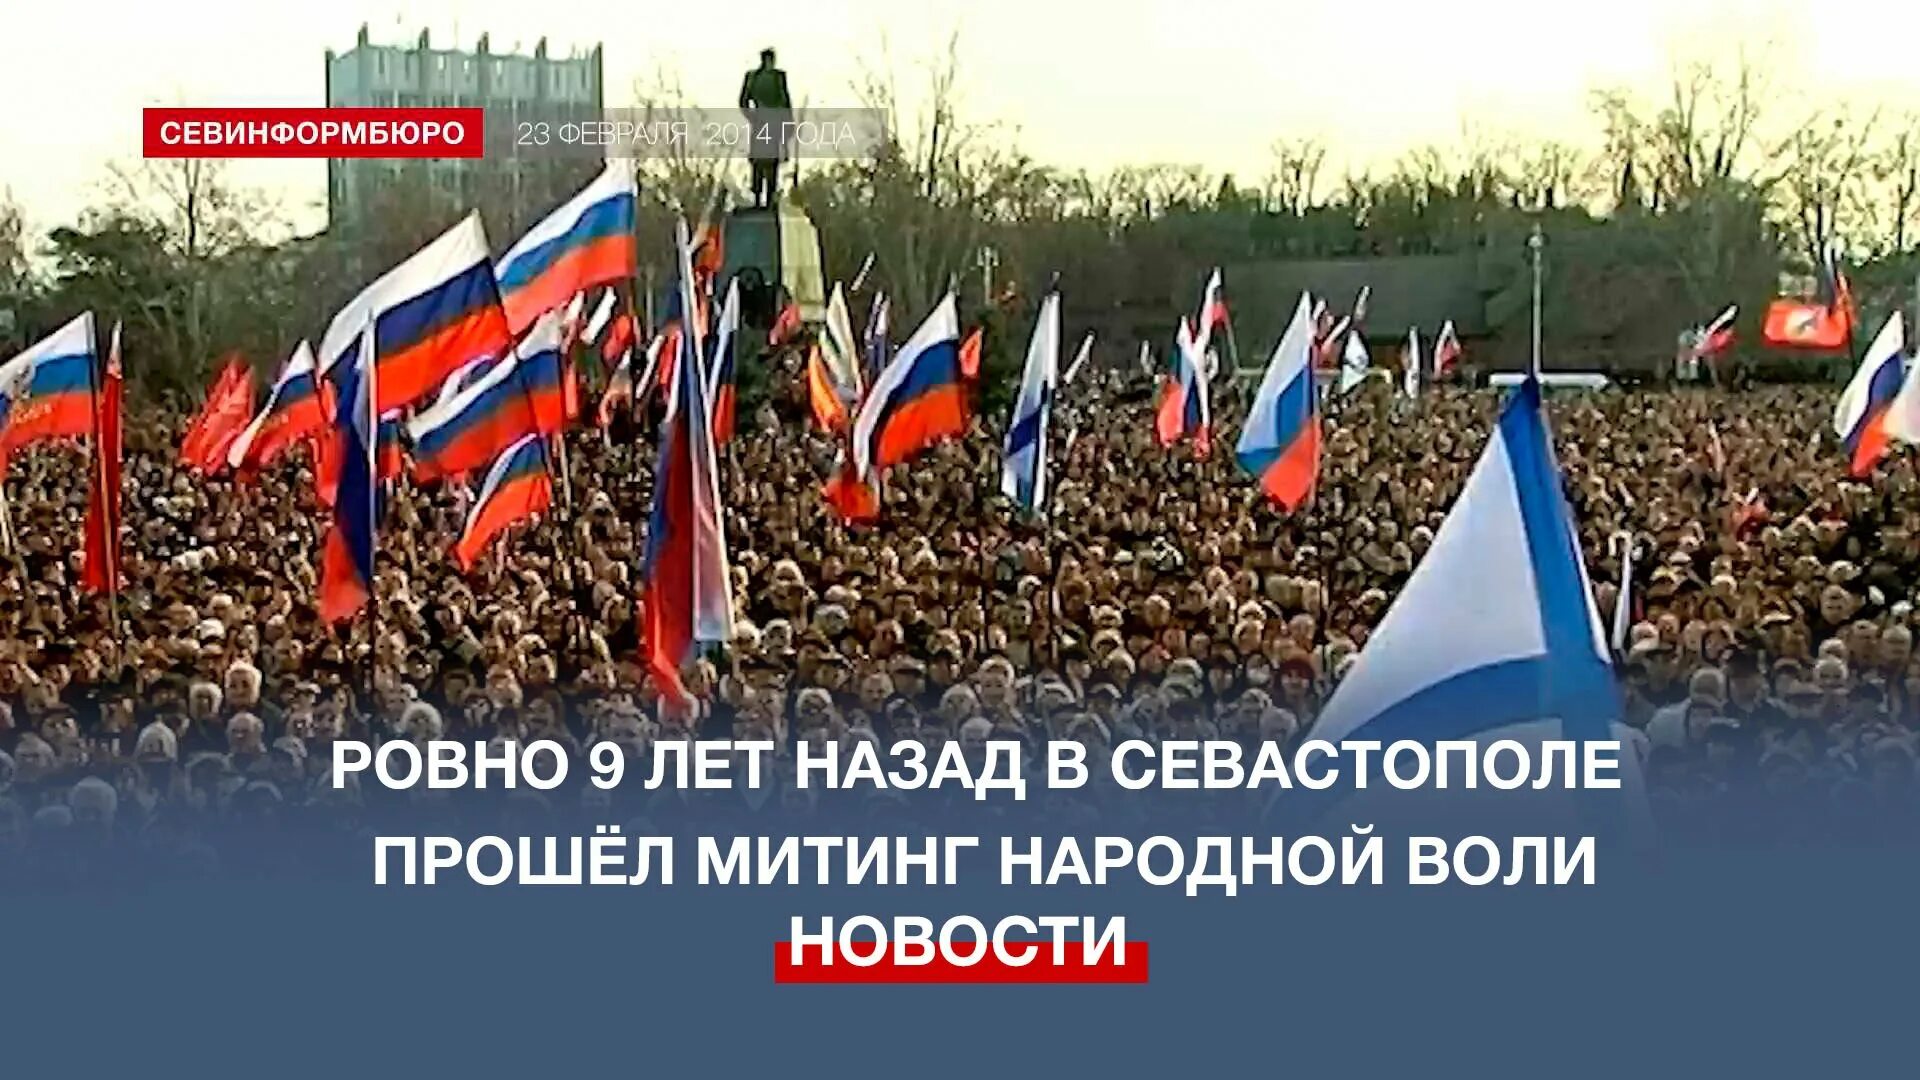 Митинг народной воли Севастополь. День народной воли в Севастополе. Митинг народной воли 23 февраля 2014 в Севастополе.